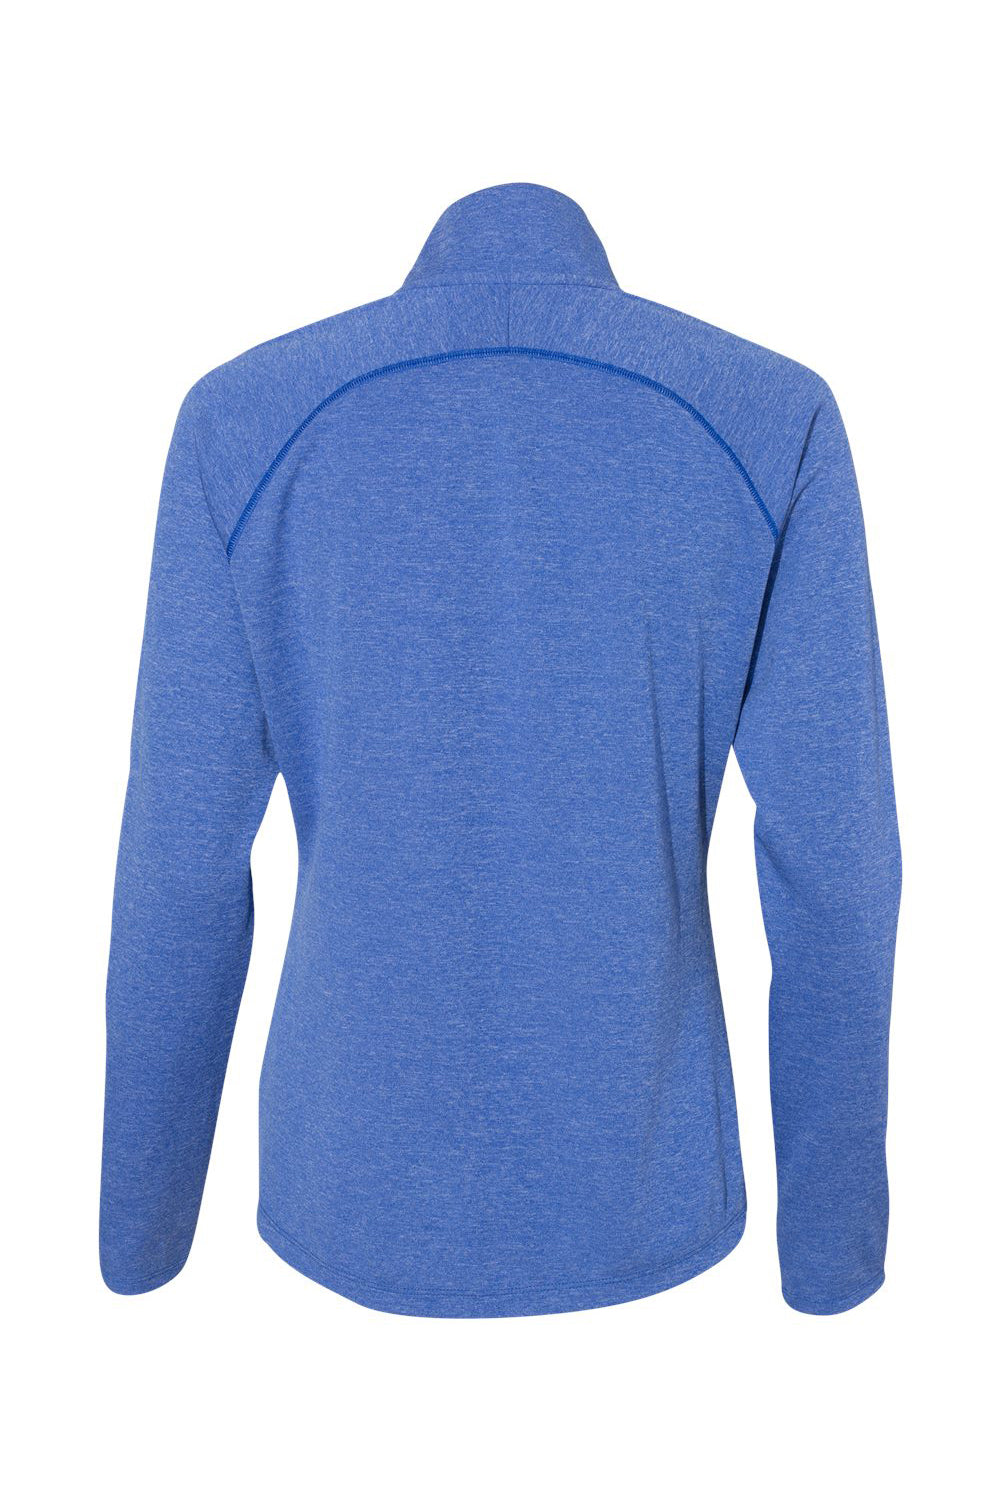 Adidas A281 Womens UPF 50+ 1/4 Zip Sweatshirt Heather Collegiate Royal Blue/Carbon Grey Flat Back